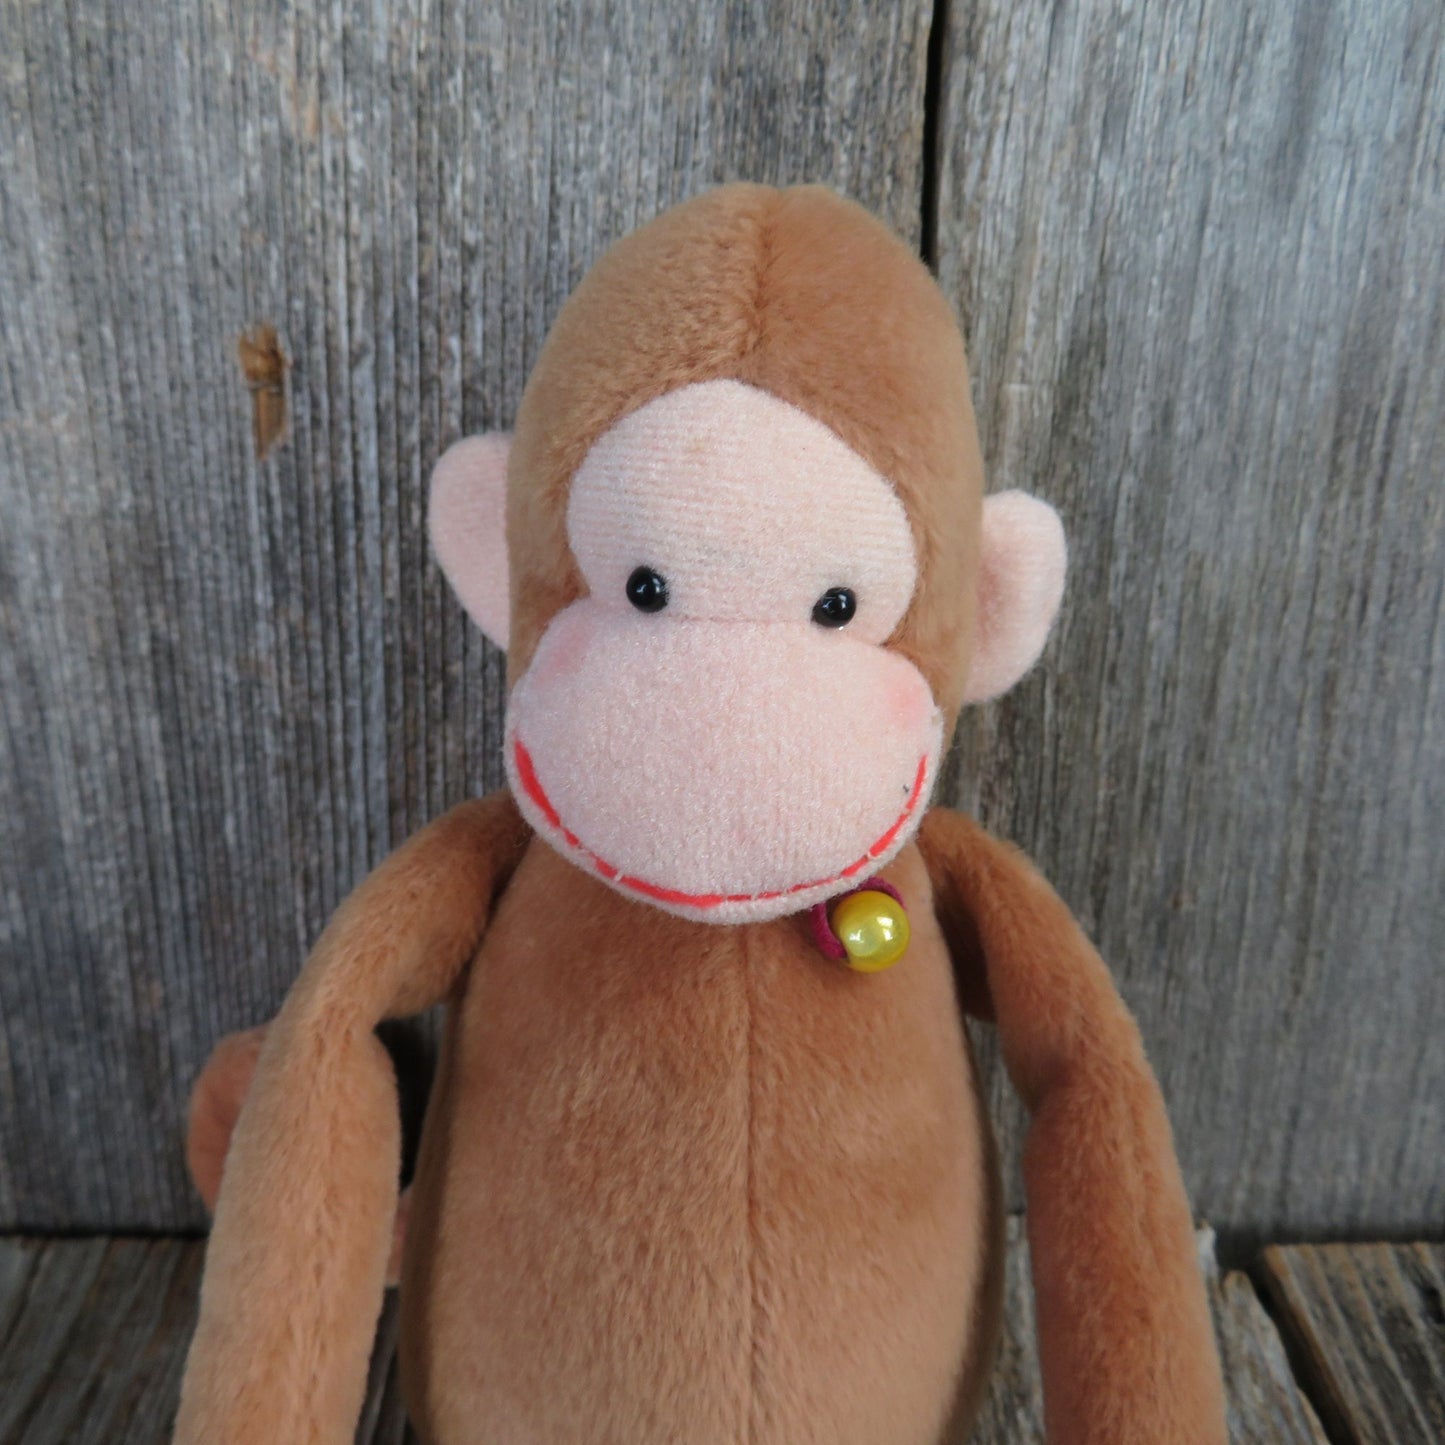 Vintage Monkey Plush Promise Ring Micanga Sekiguchi 1993 Wrapping Arms Legs Pink Butt Stuffed Animal